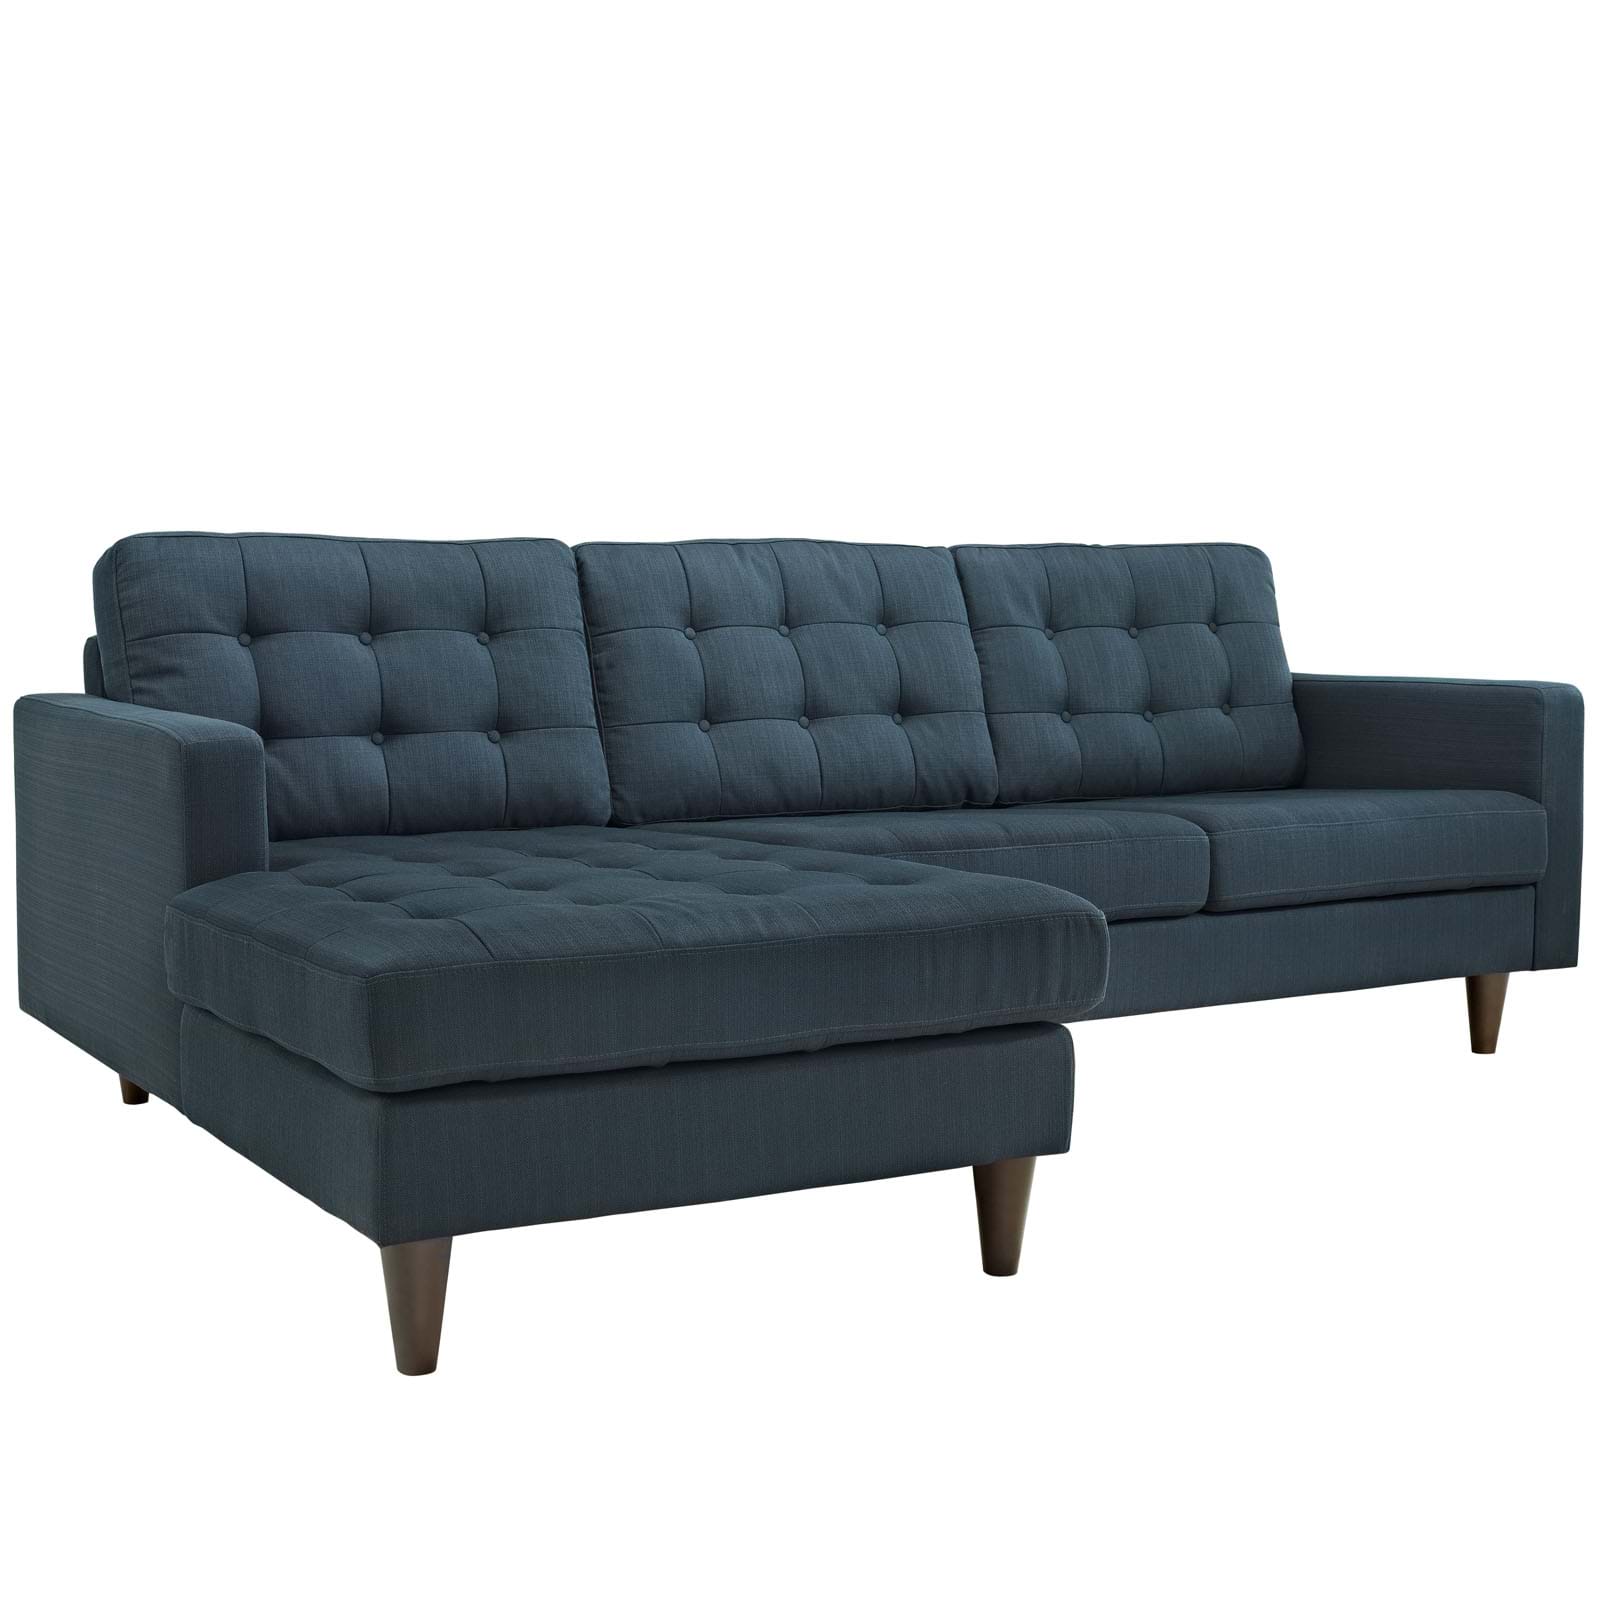 Empress Upholstered Sectional Sofa